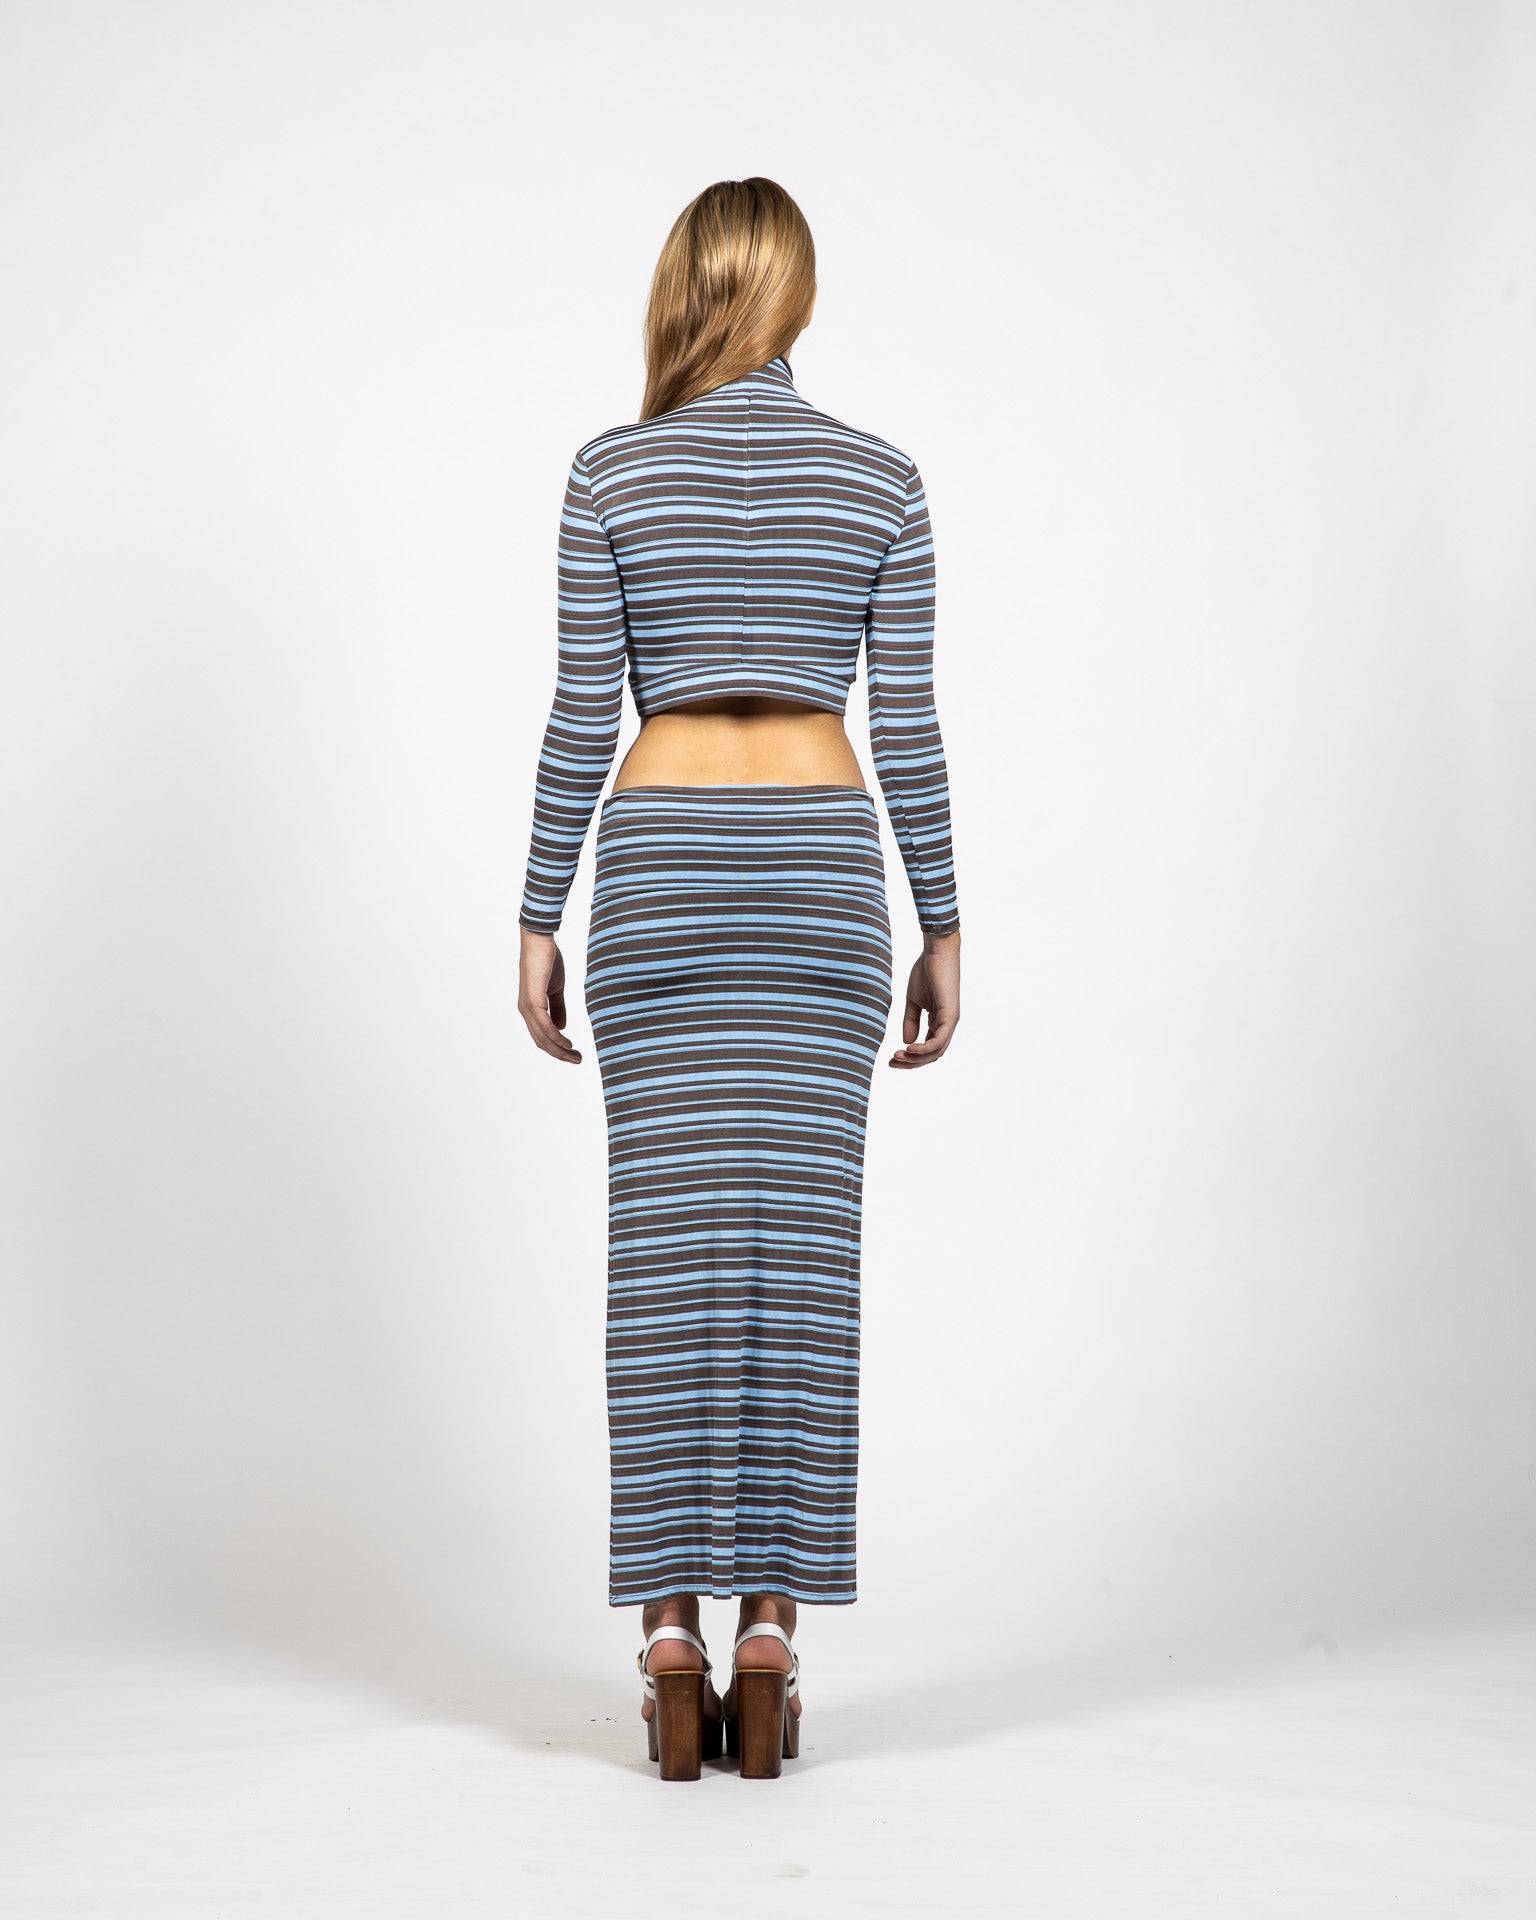 Printed Top With Matching Skirt - Back View - Samuel Vartan